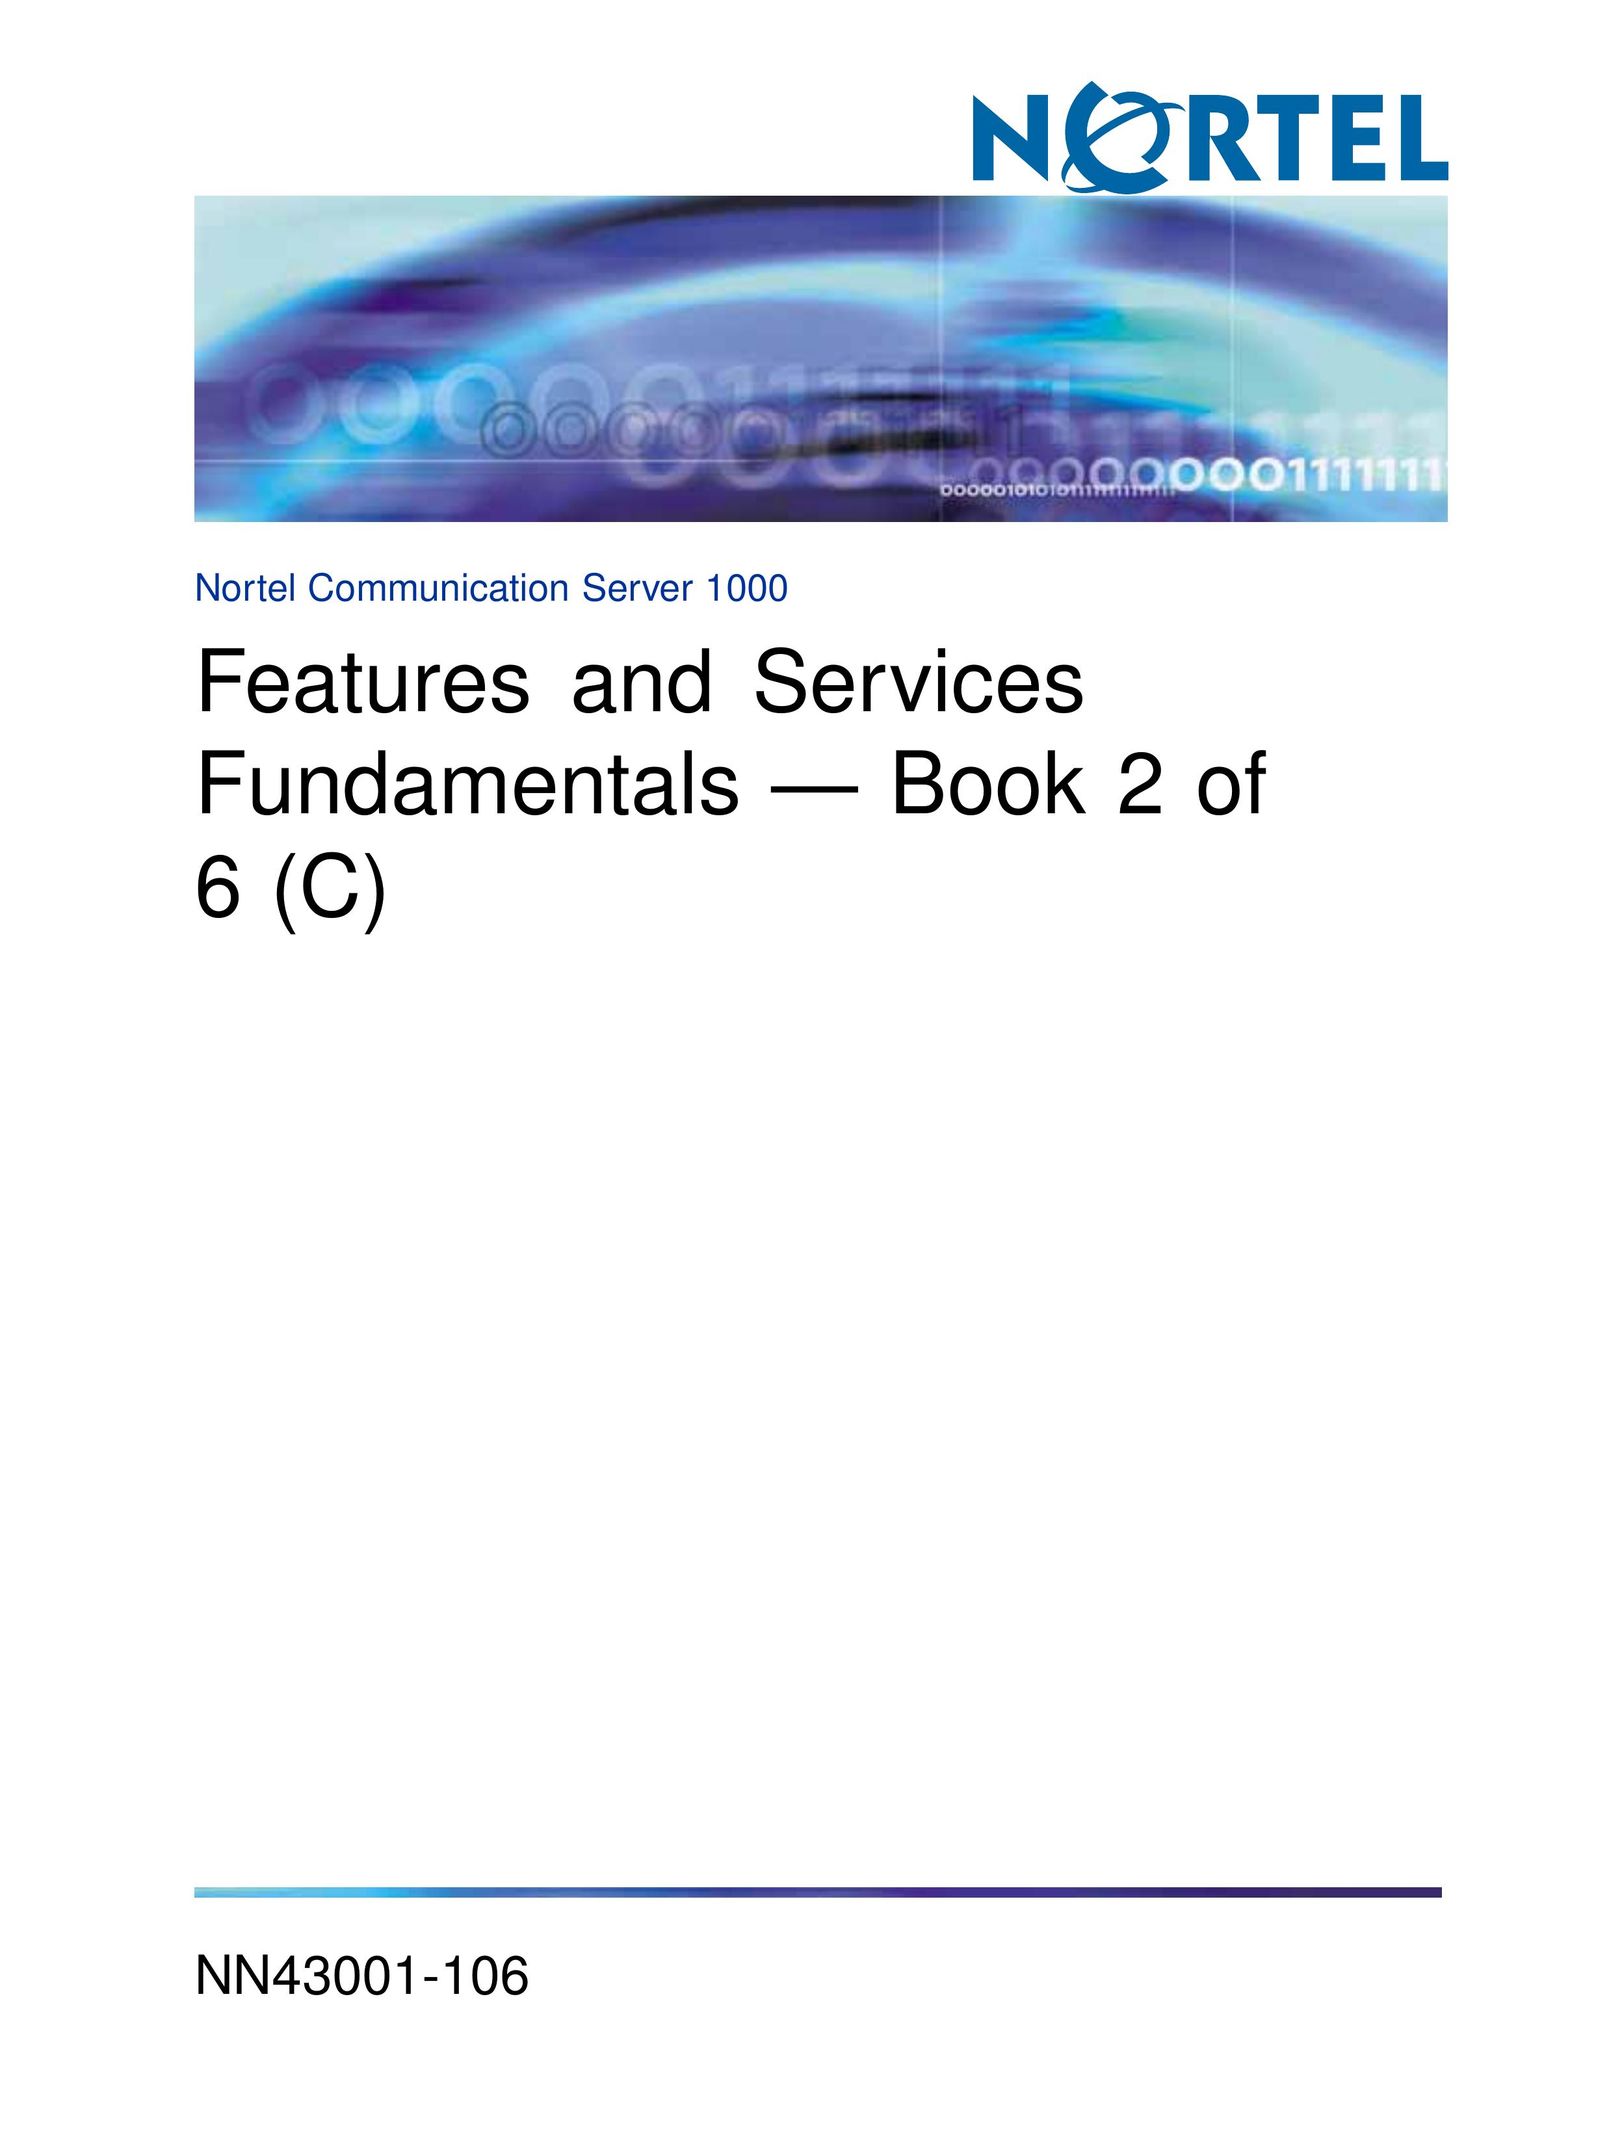 Nortel Networks NN43001-106 Server User Manual